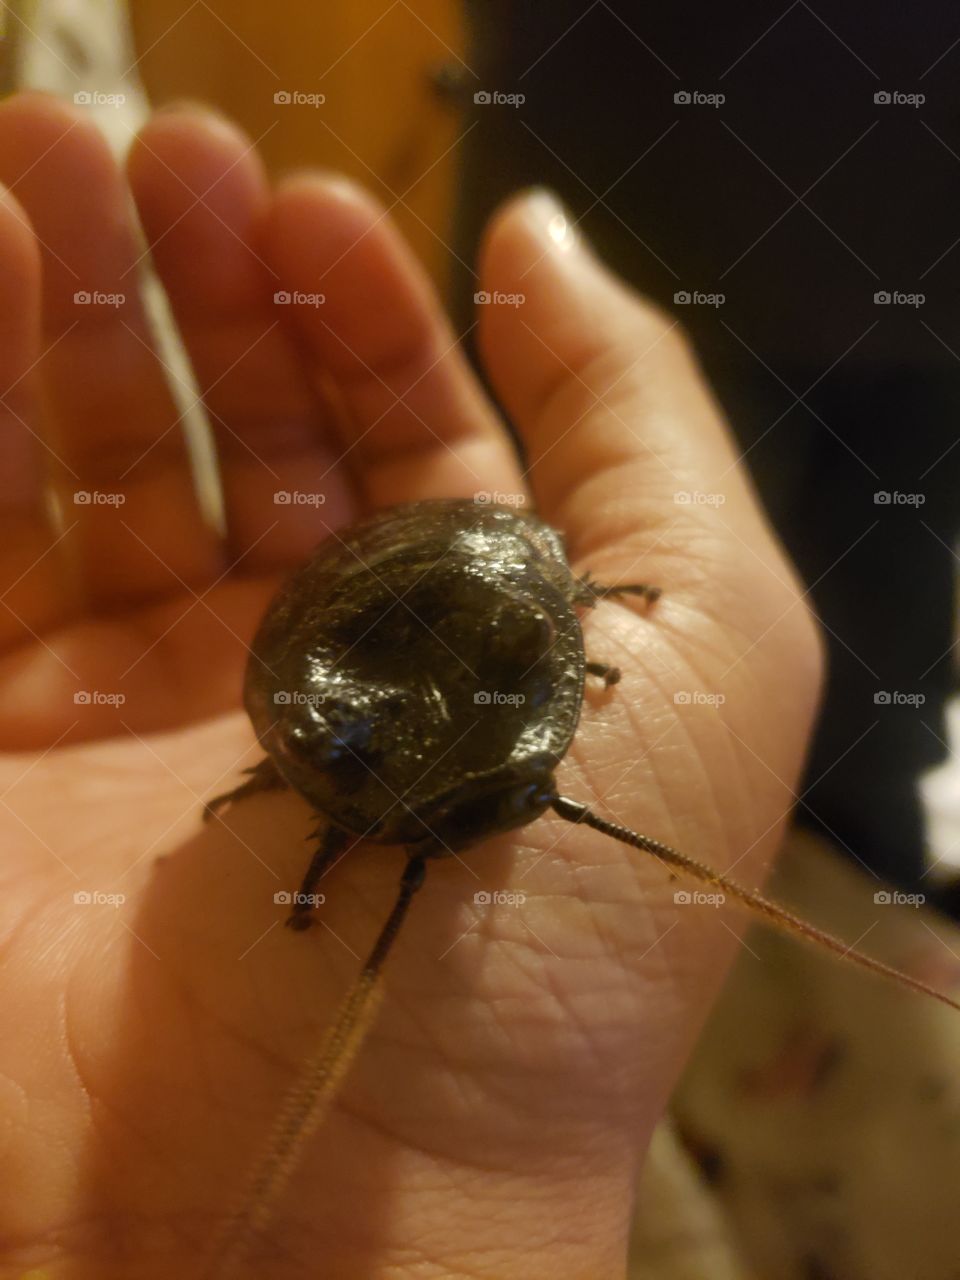 madagascar hissing cockroach on hand